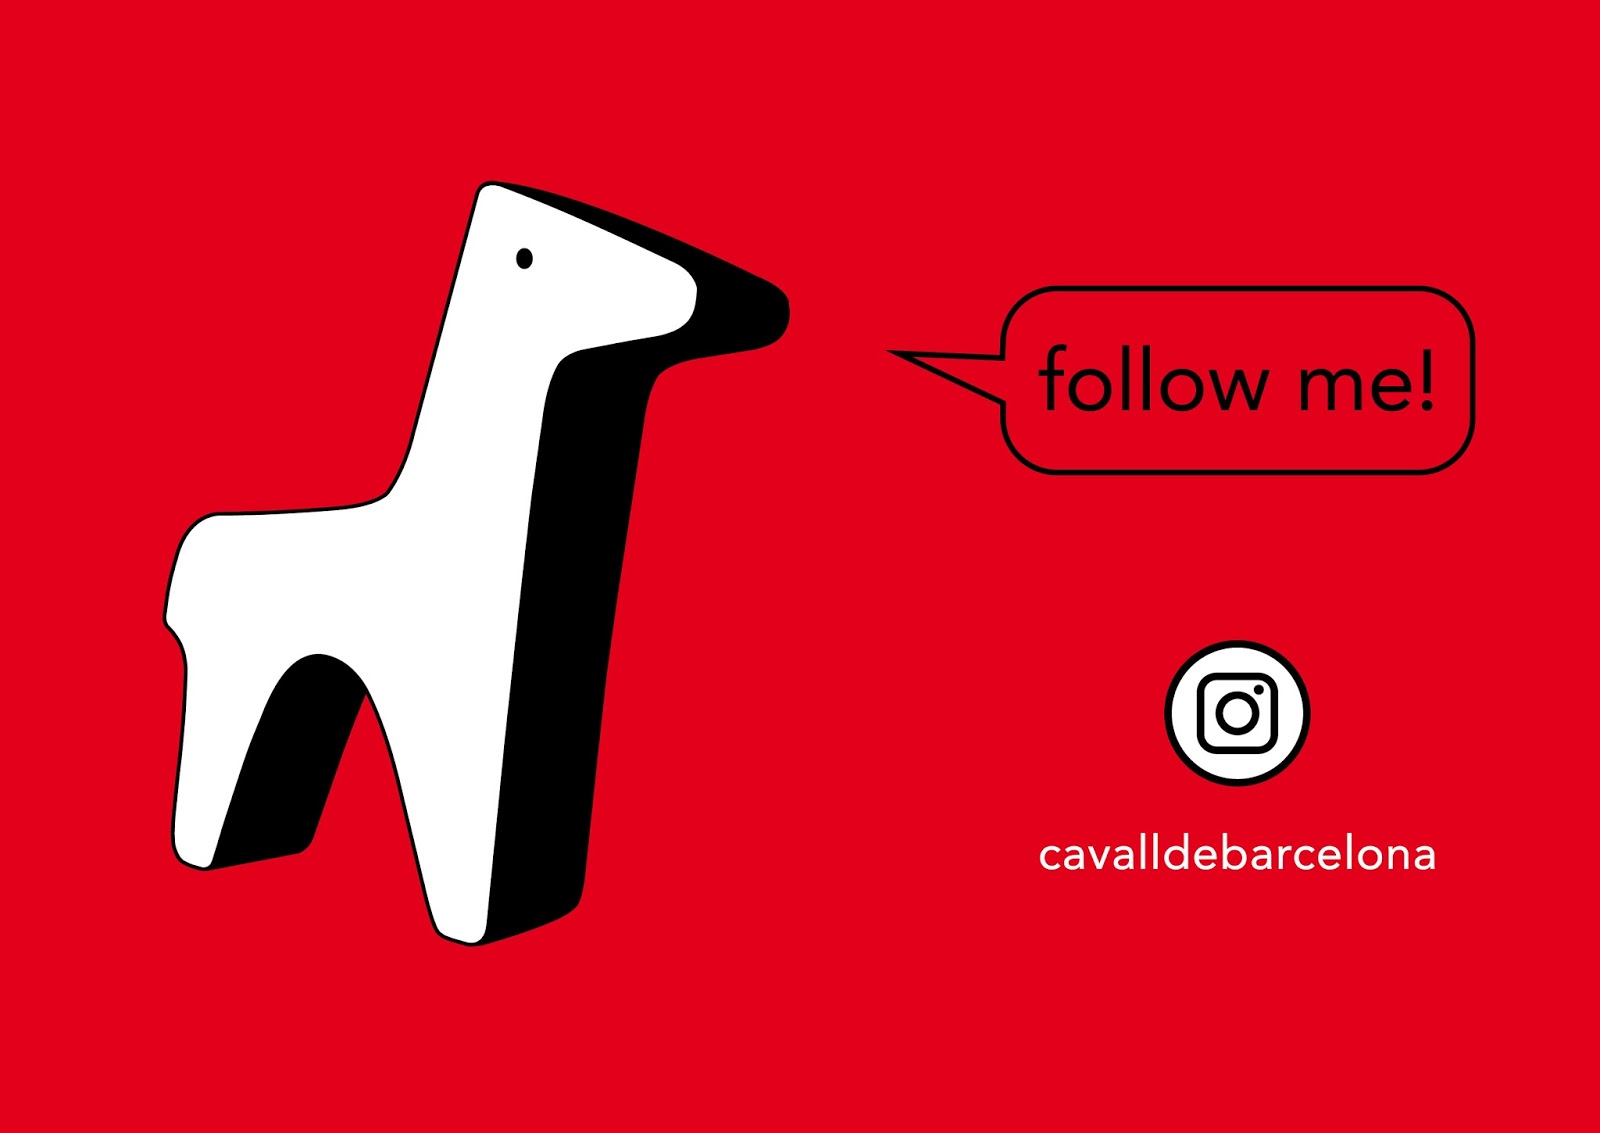 follow me on instagram cavalldebarcelona - follow me on instagram image